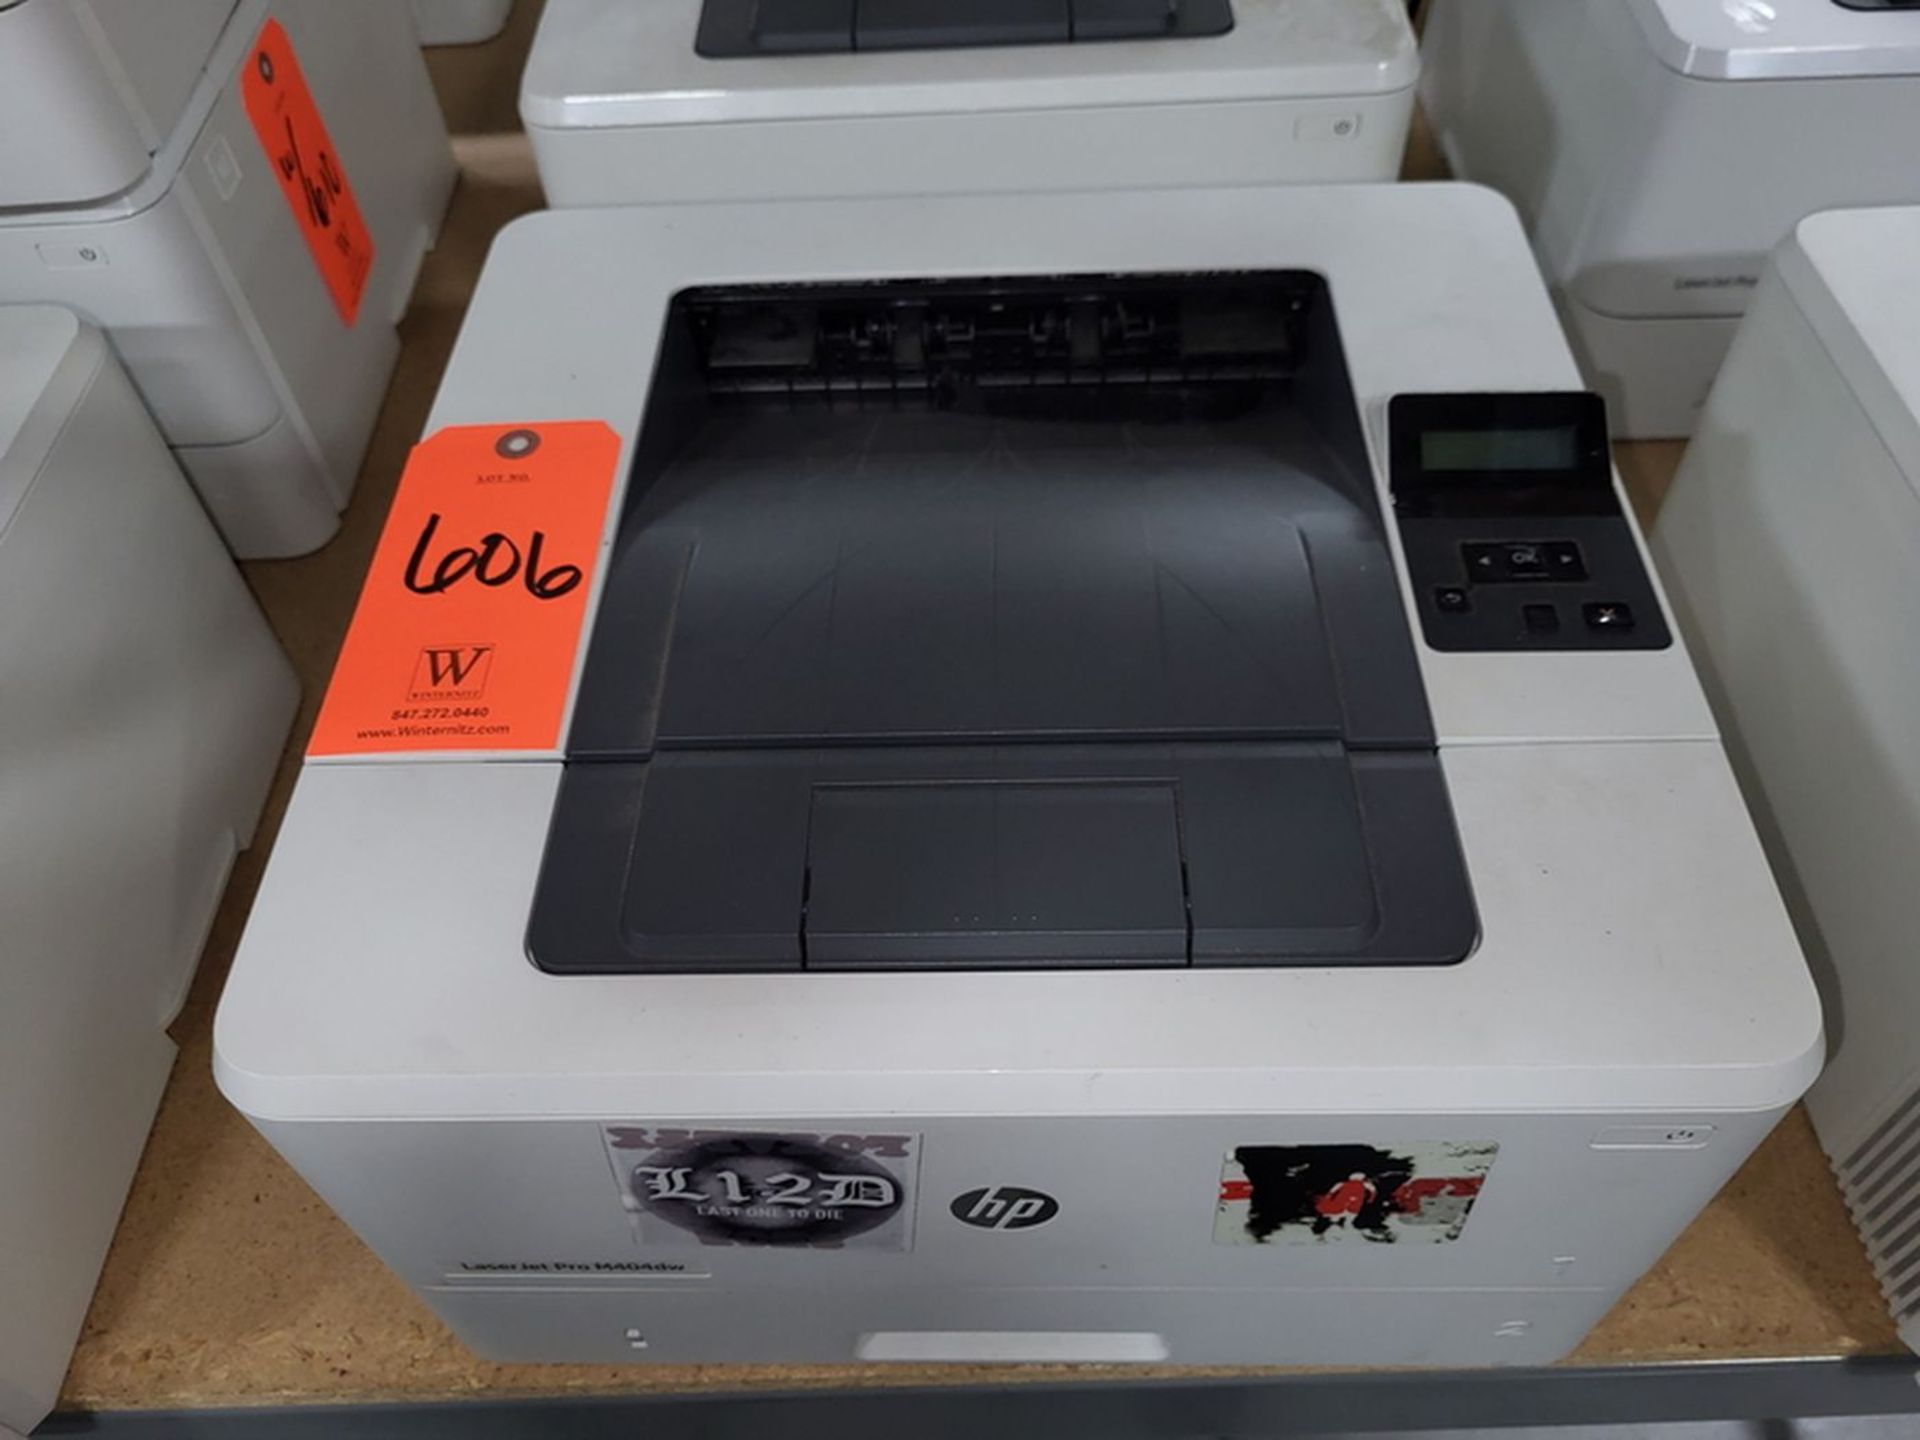 HP LaserJet Pro M404dw Laser Printer;